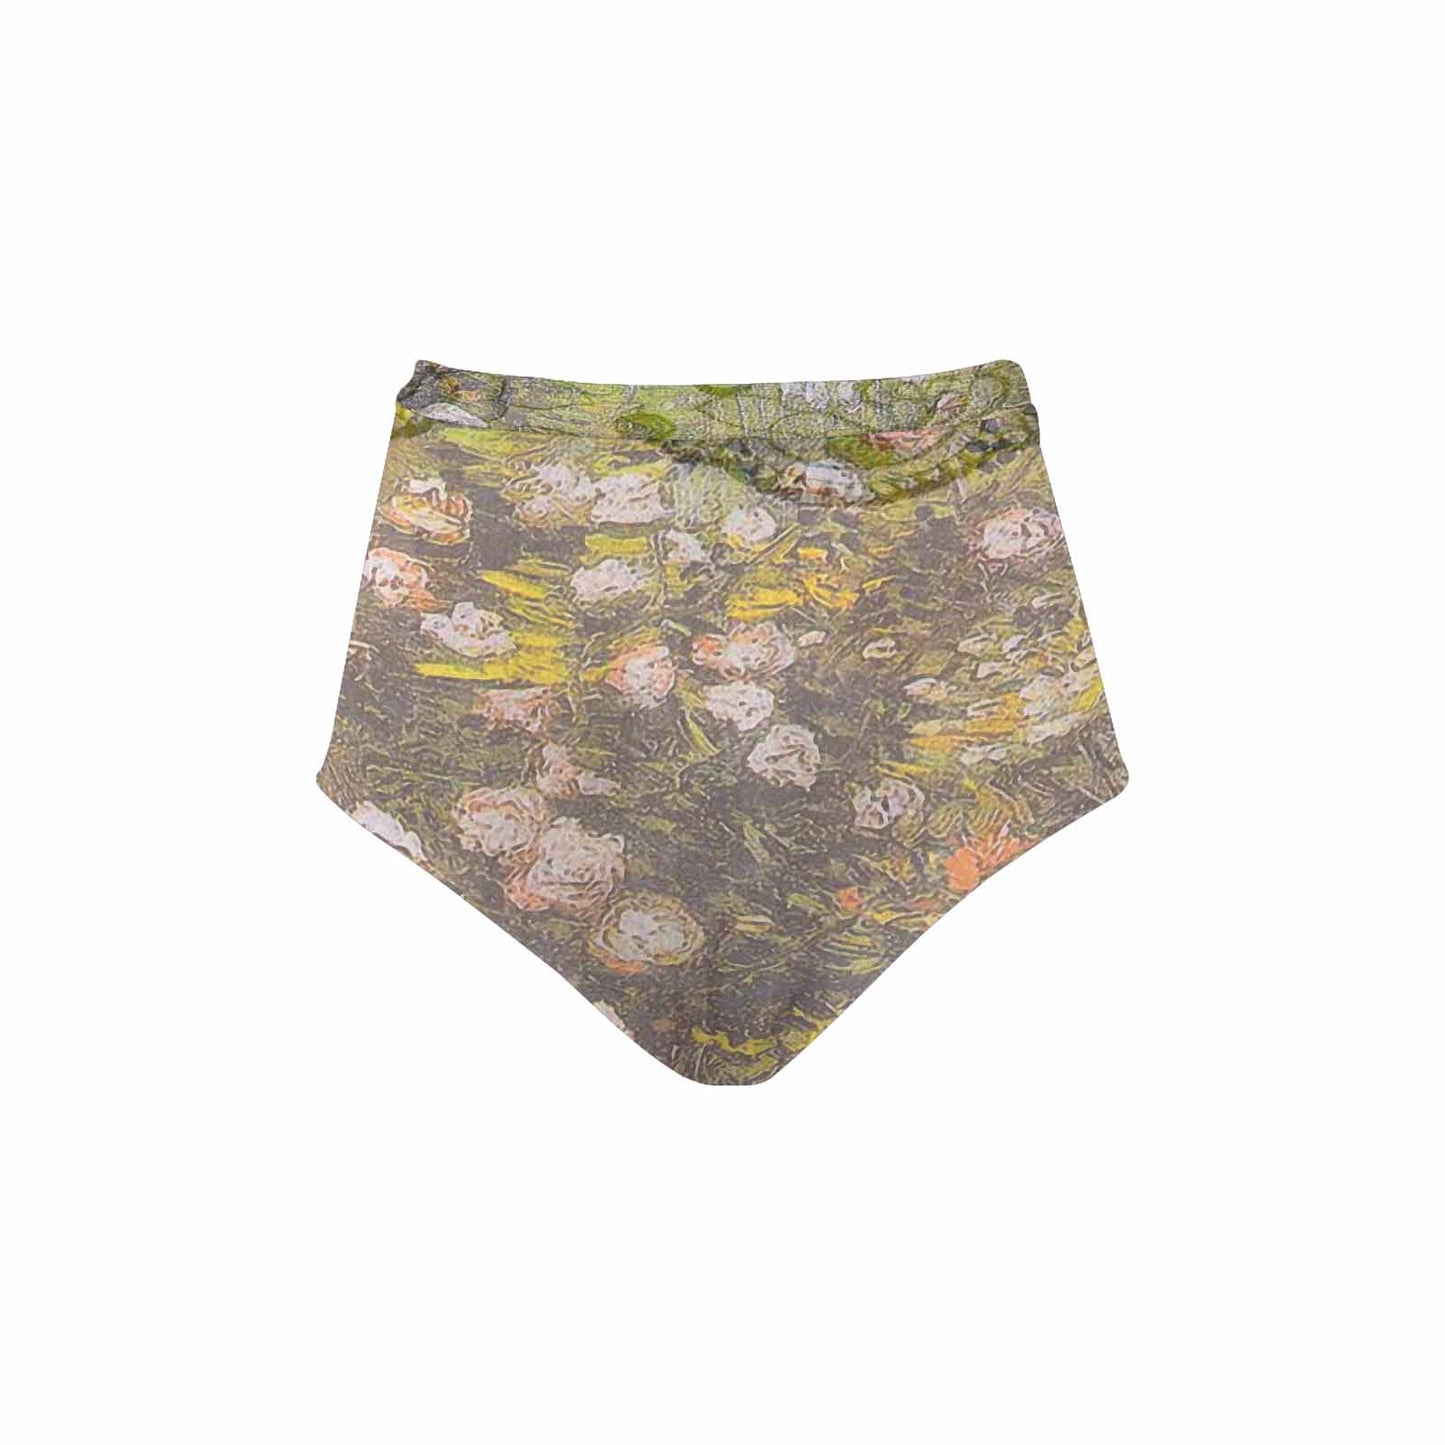 Vintage floral High waist bikini bottom, Design 05x